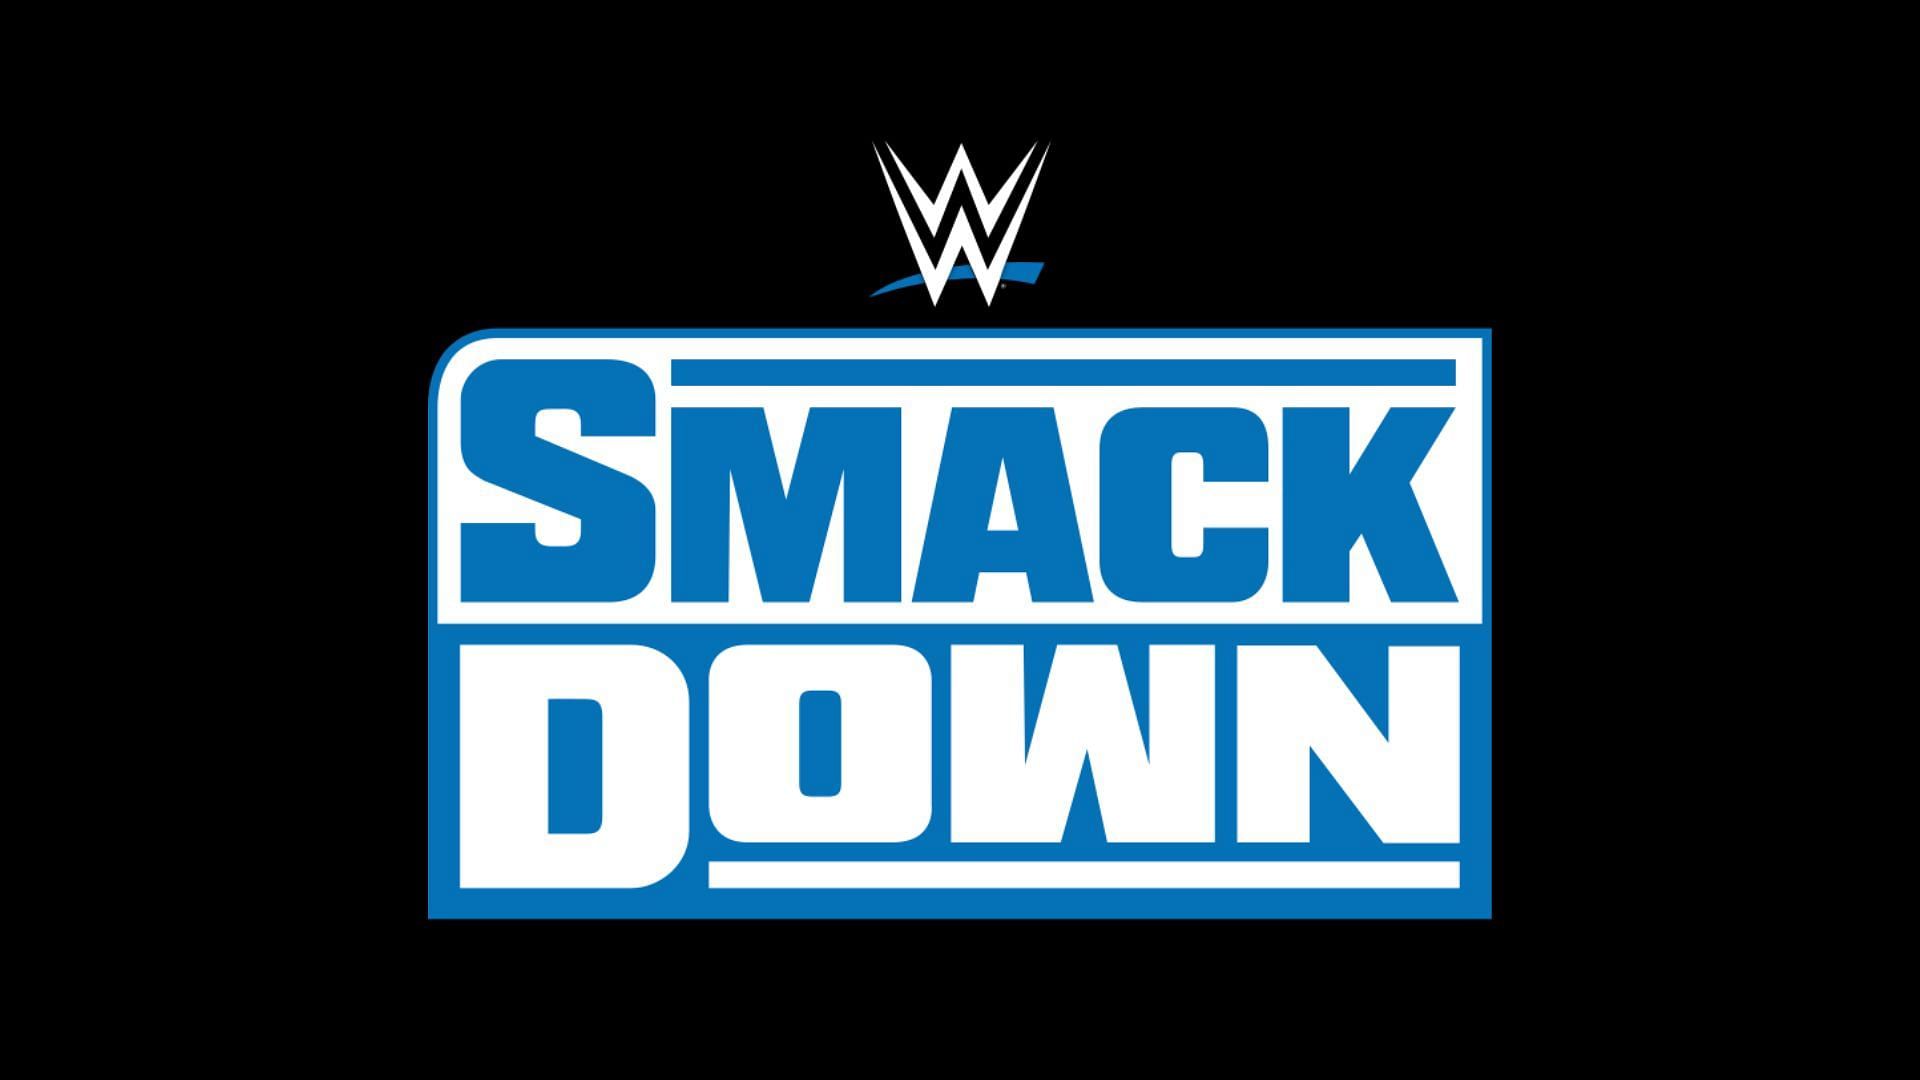 WWE SmackDown featured an Intercontinental Championship match